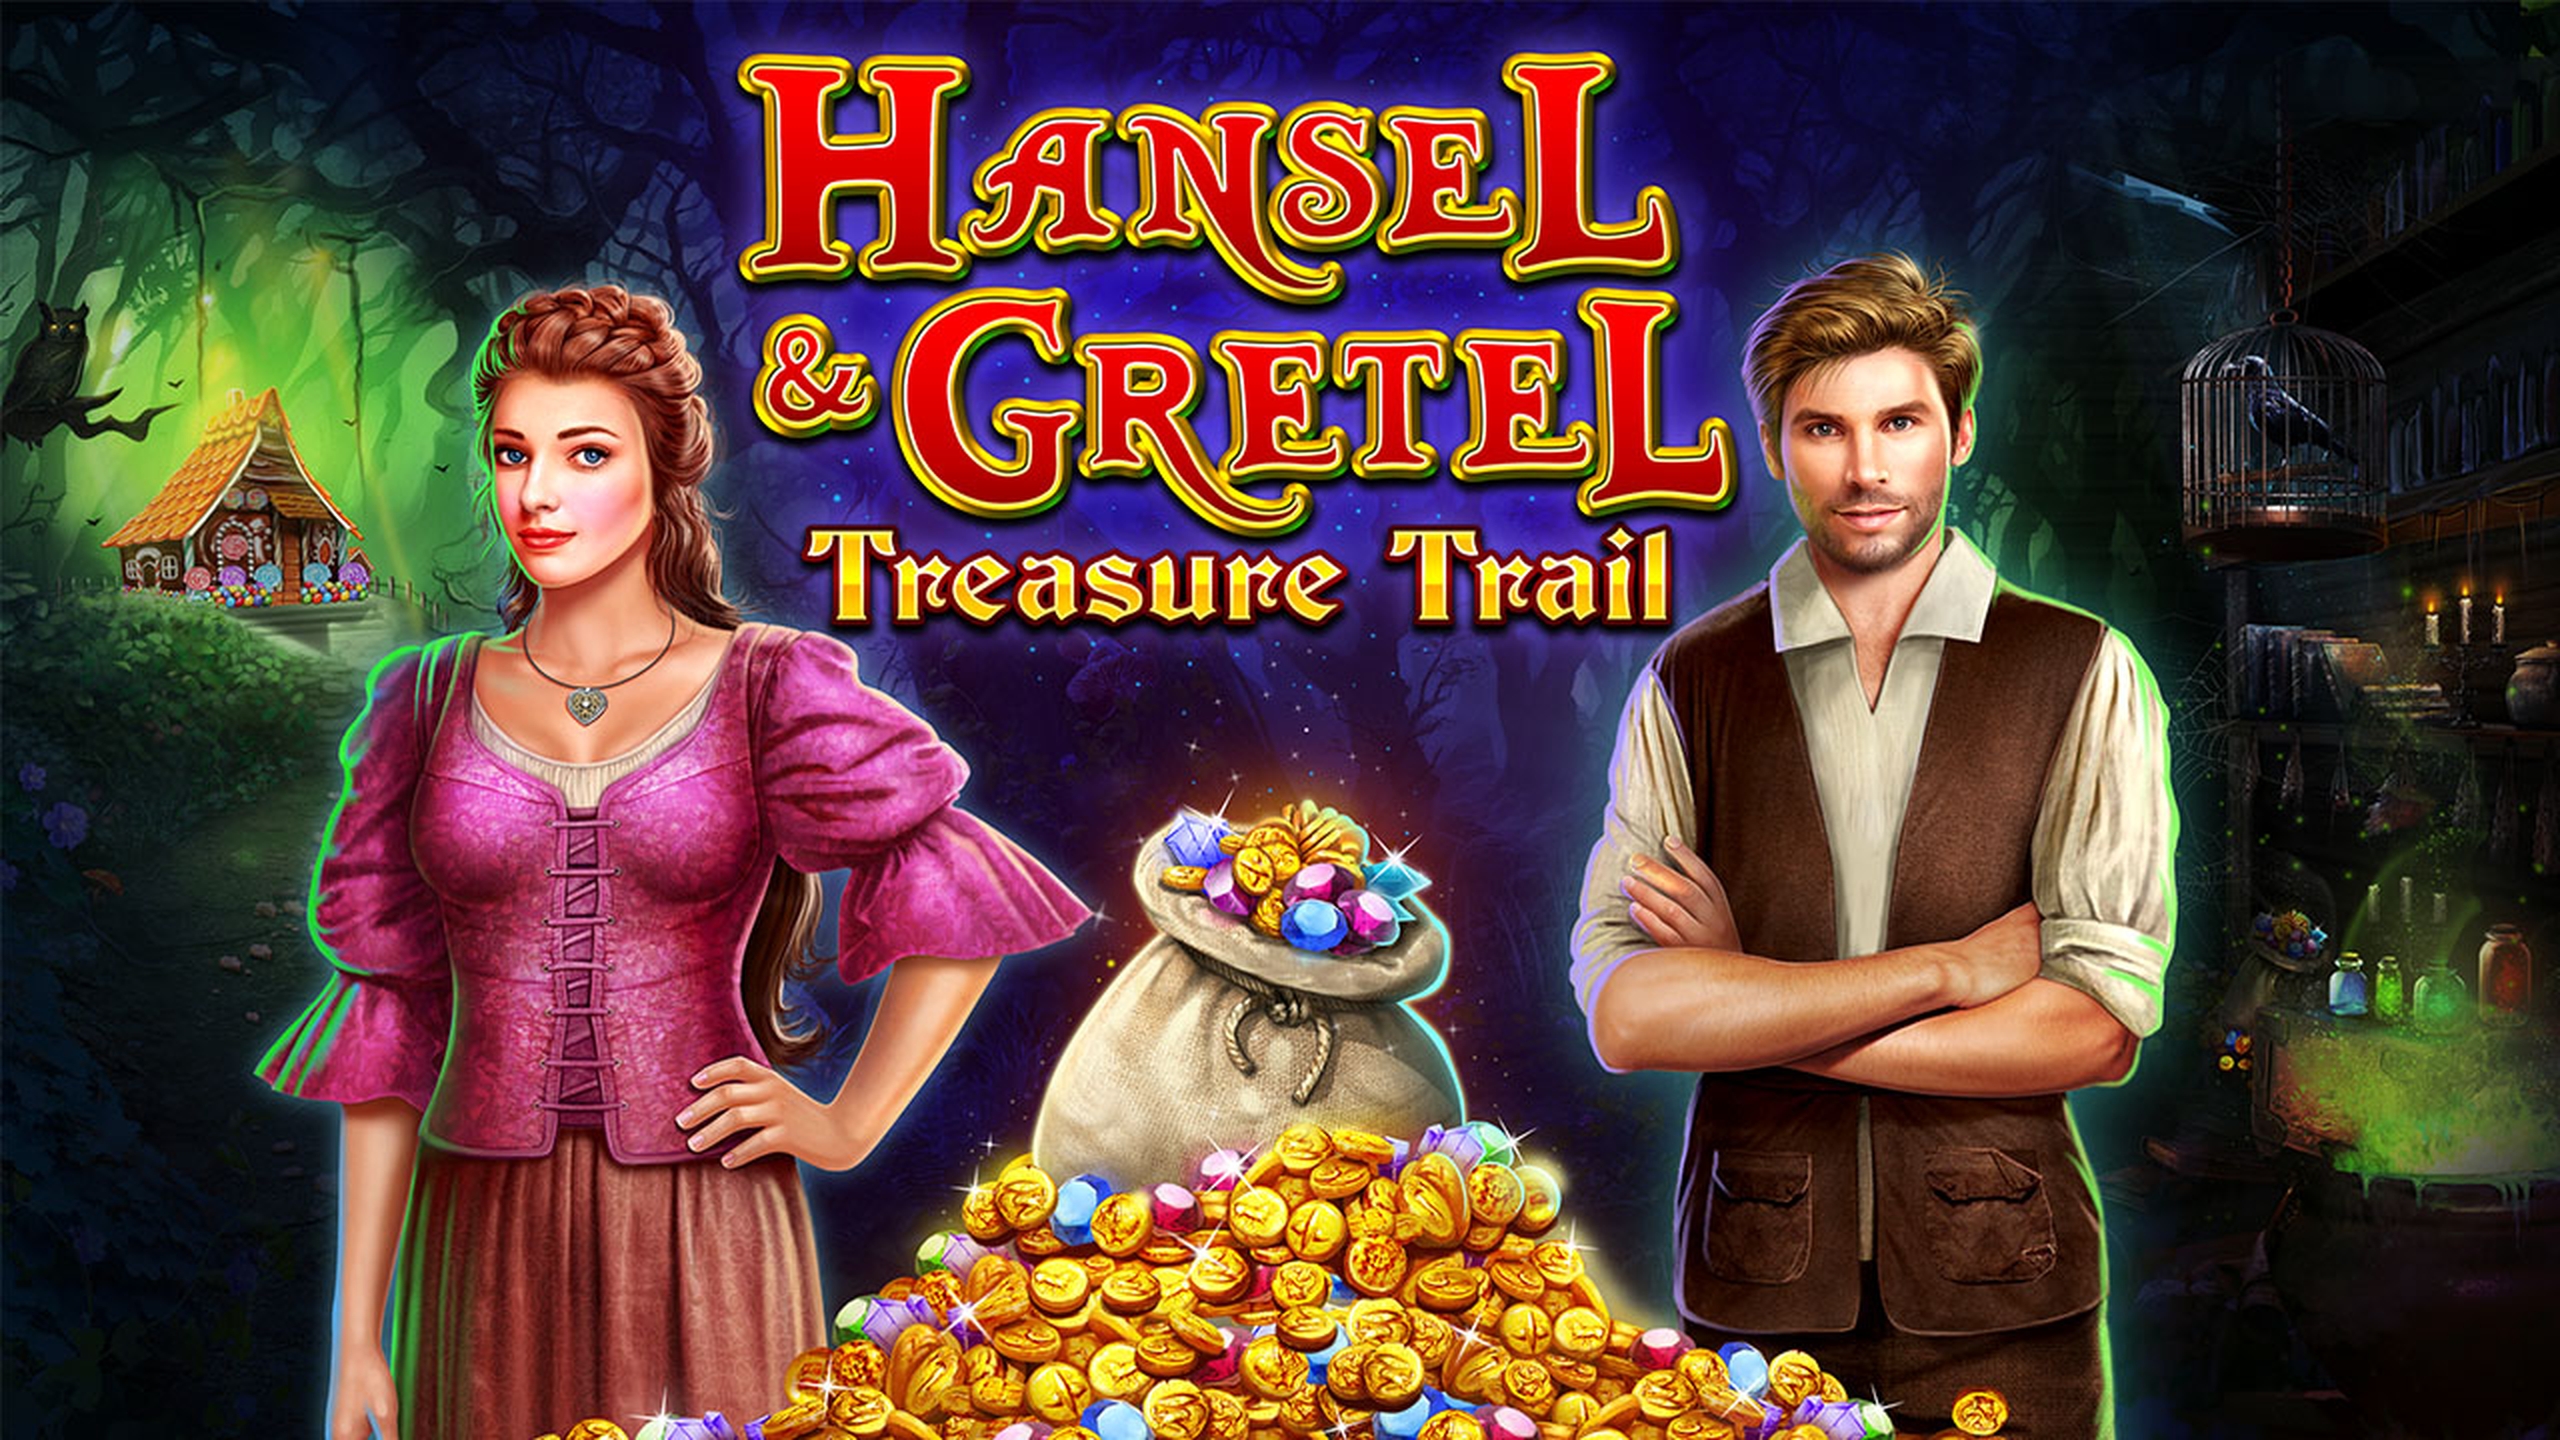 Hansel & Gretel Treasure Trail